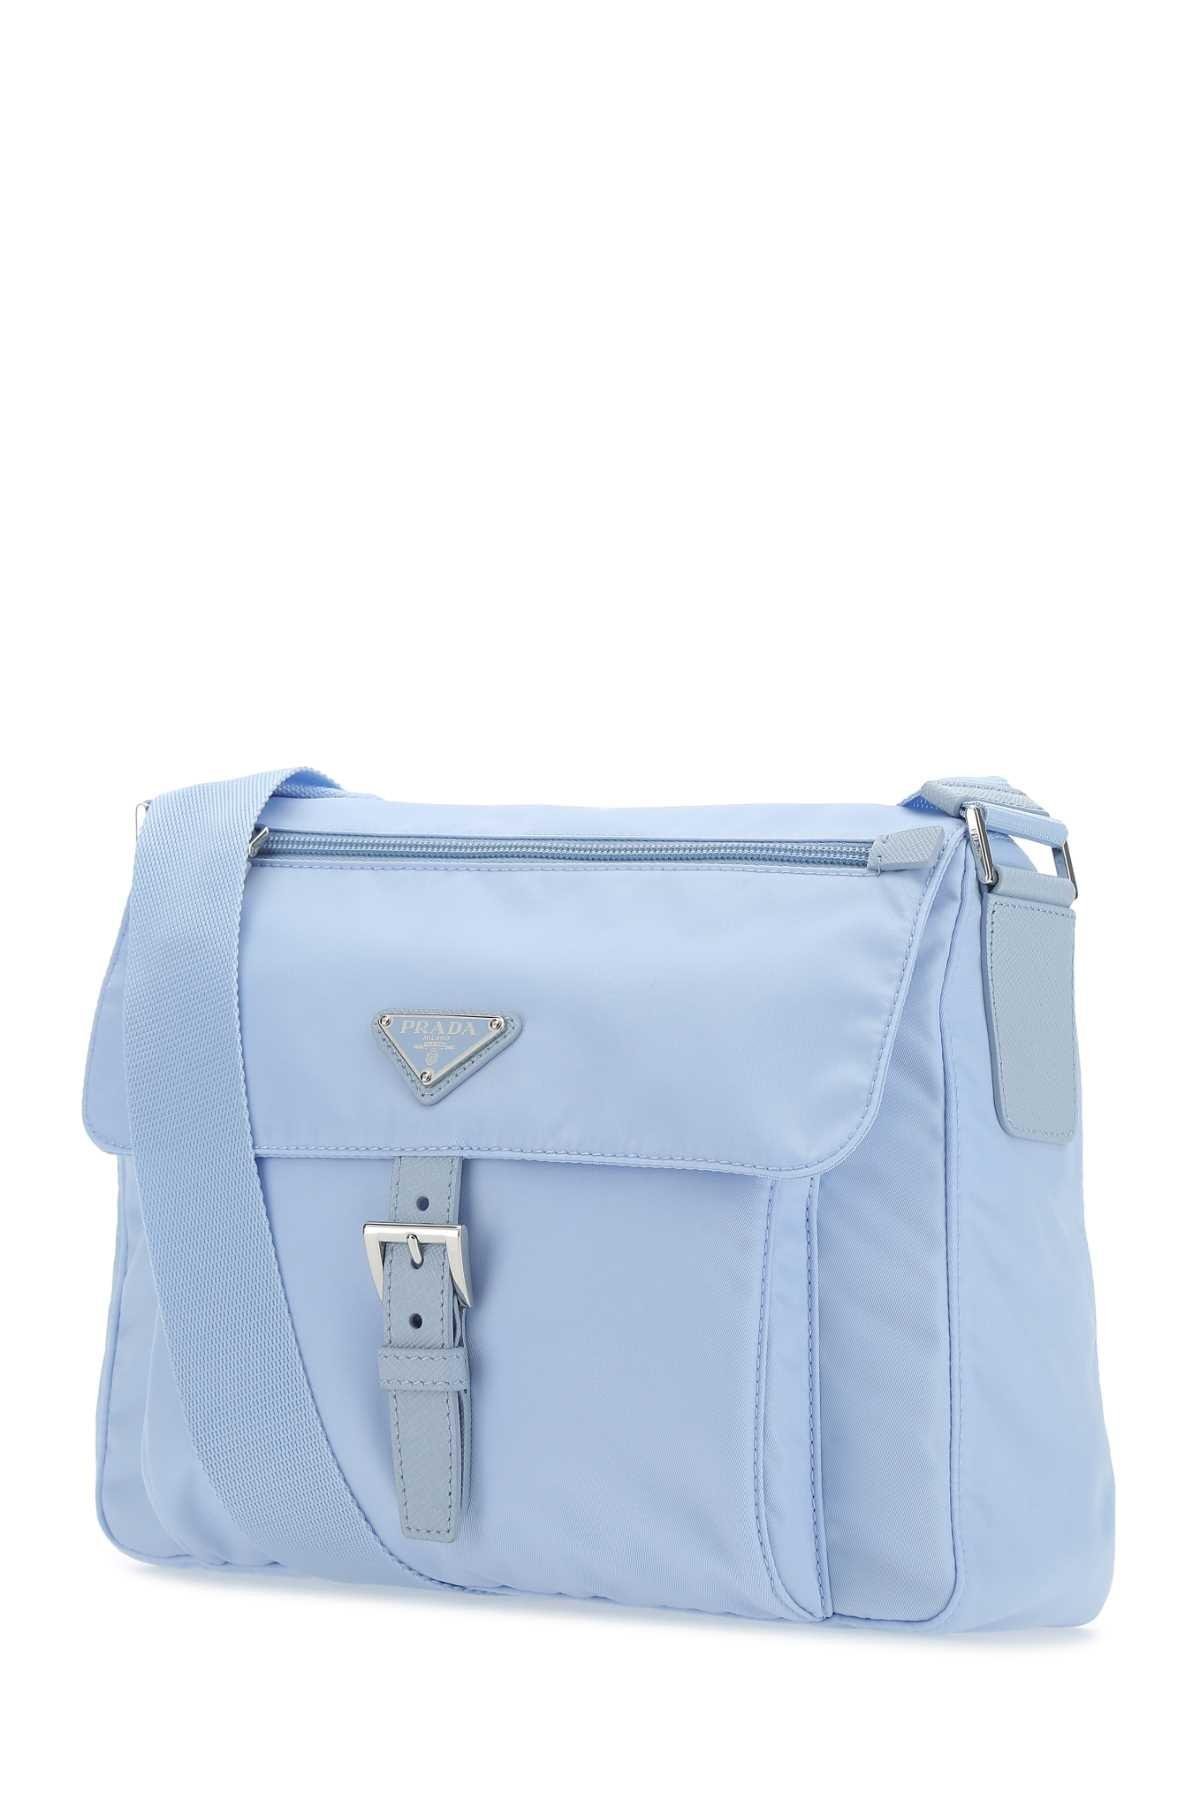 Prada Light Blue Re-nylon Crossbody Bag | Lyst